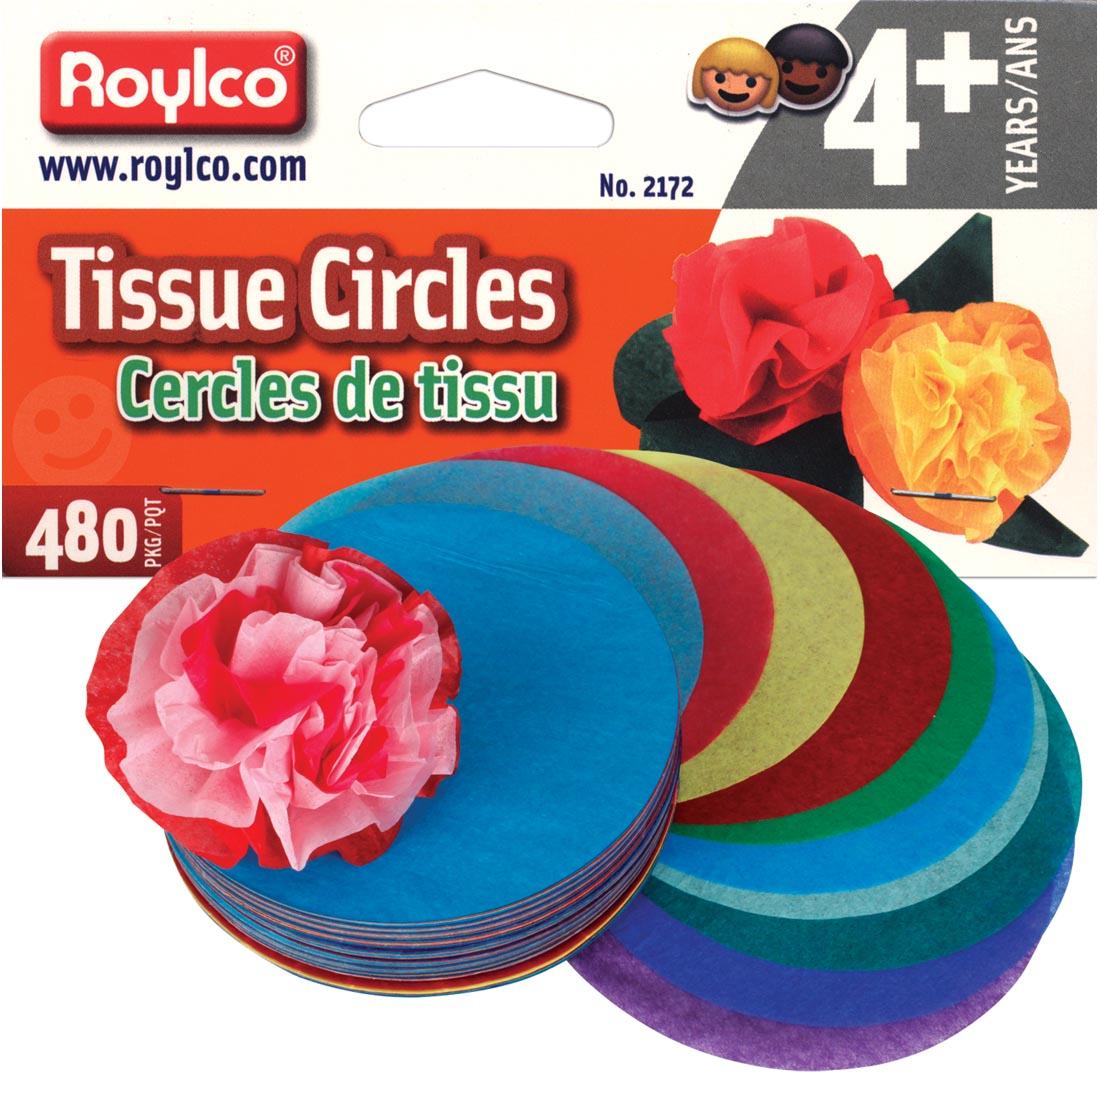 Roylco Tissue Circles